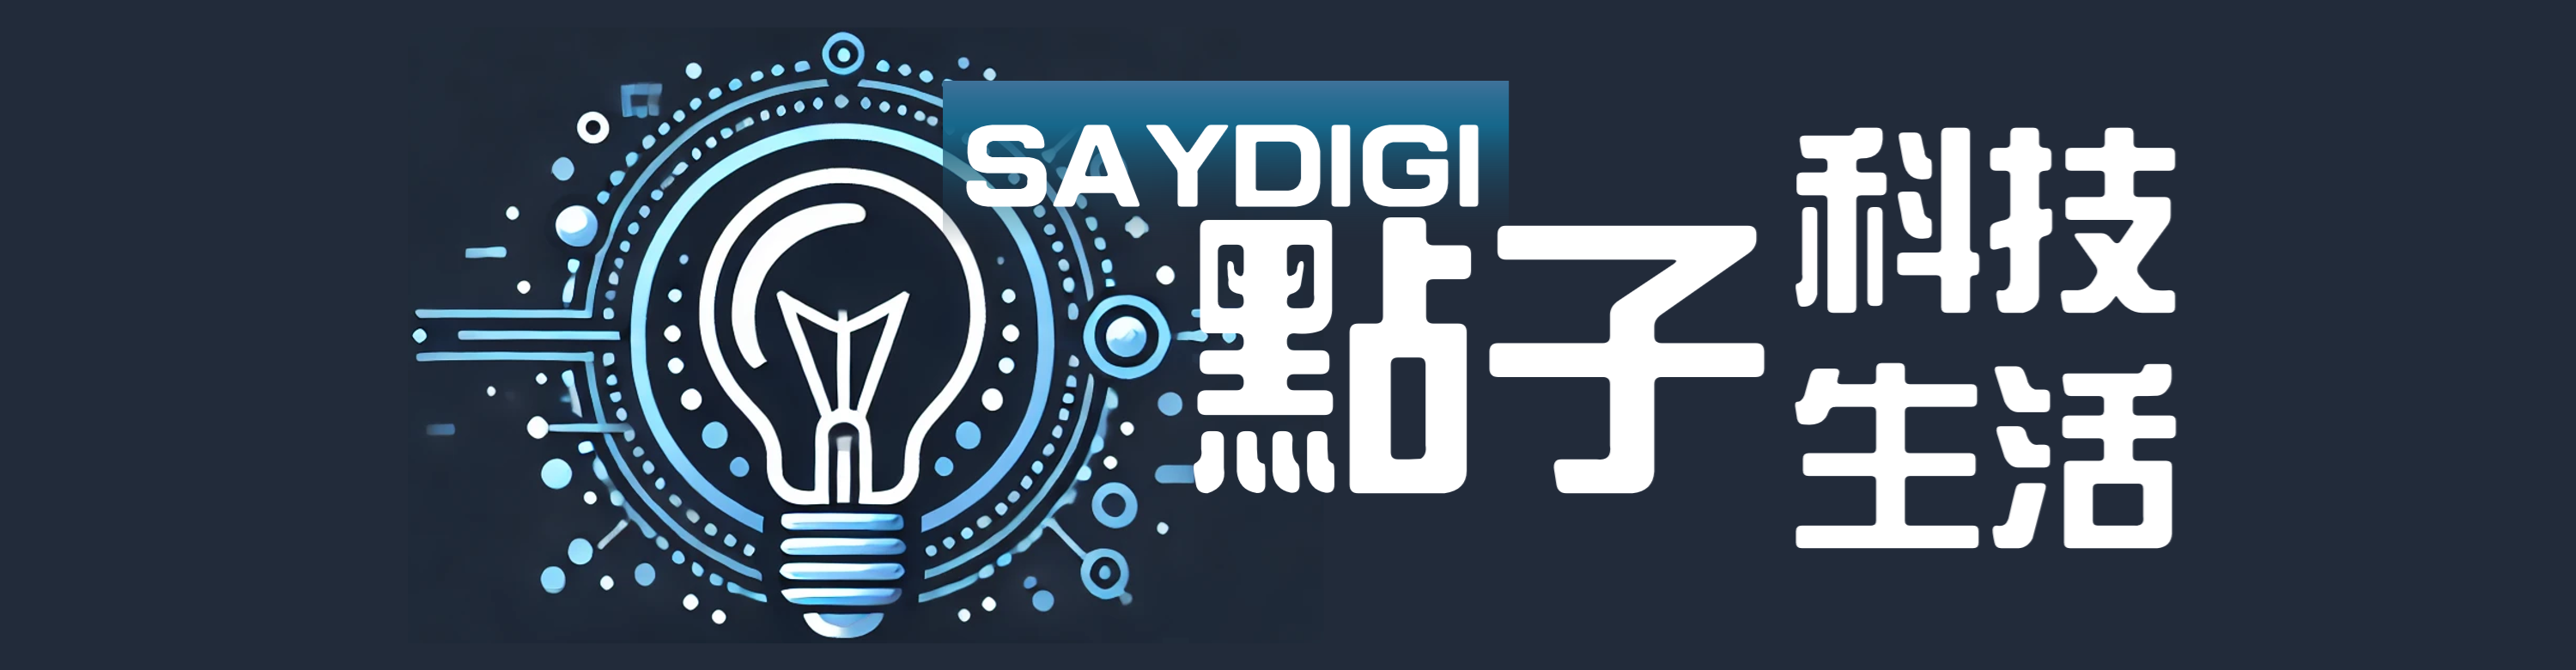 SayDigi | 點子科技生活